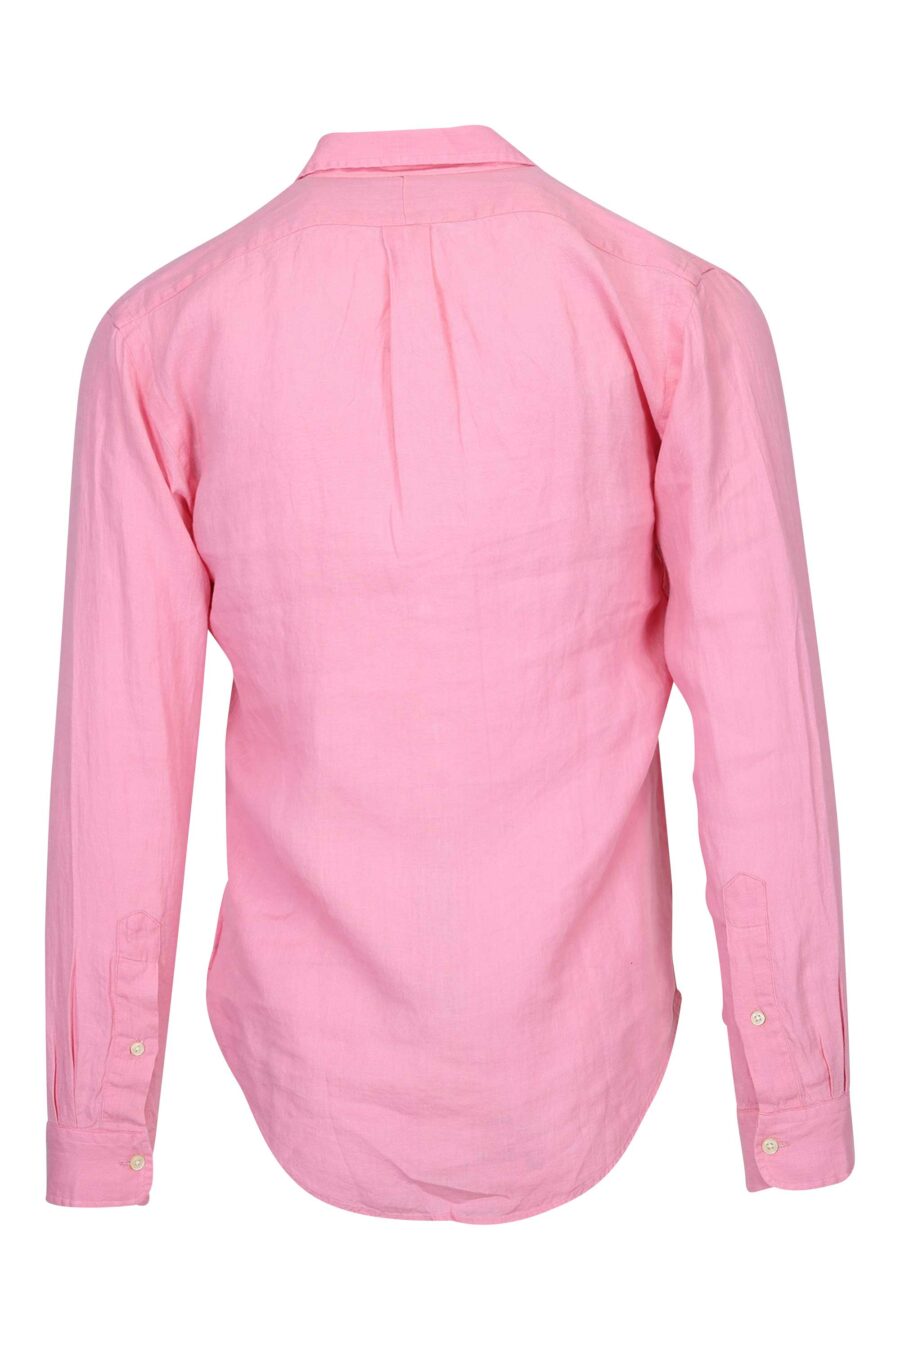 Camisa cor-de-rosa com mini-logotipo "polo" - 3616535874473 1